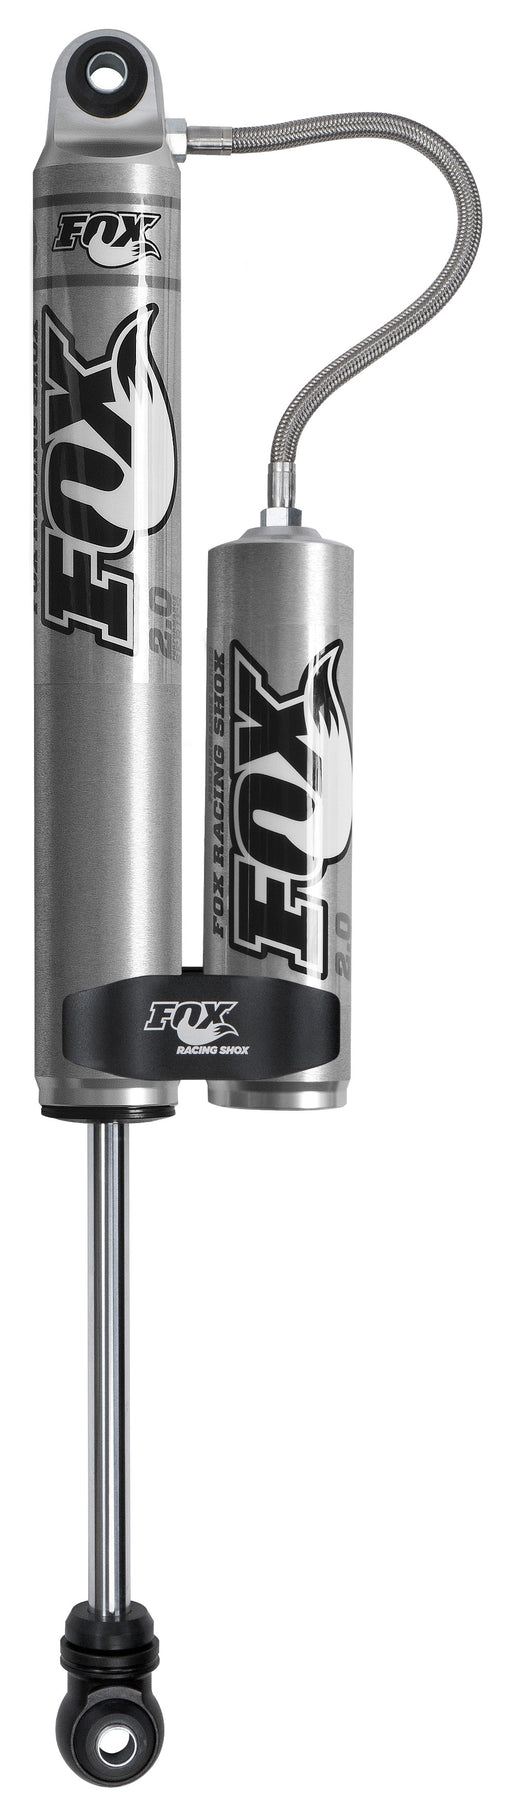 Fox Racing Shox 985-24-025 Performance Series Shock Absorber